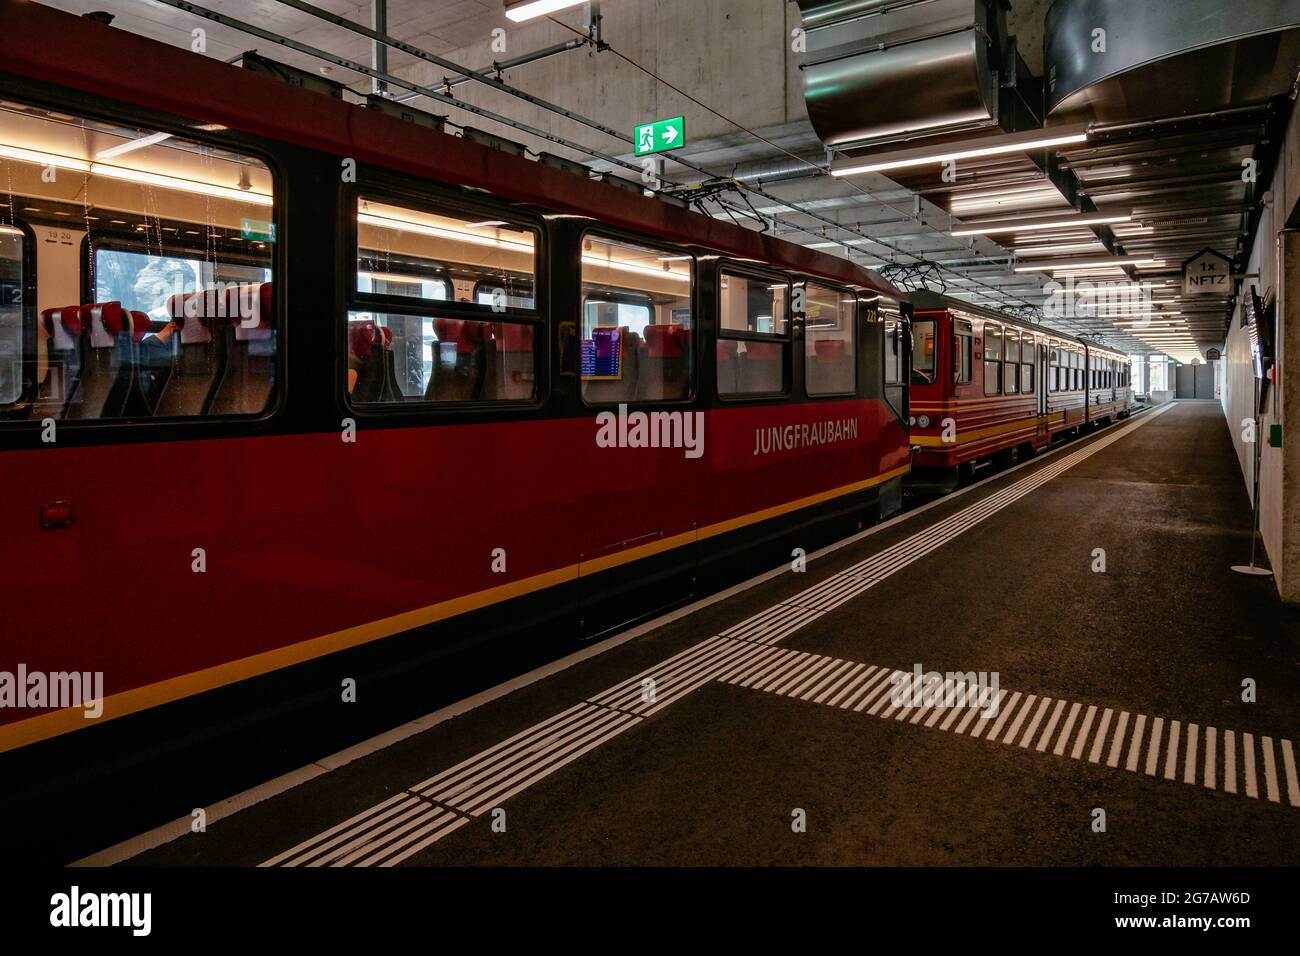 Red Iconic Train to Jungfraujoch - Jungfrau Region - Swiss Alps, Switzerland - Grindelwald, Interlaken, Lauterbrunnen Stock Photo